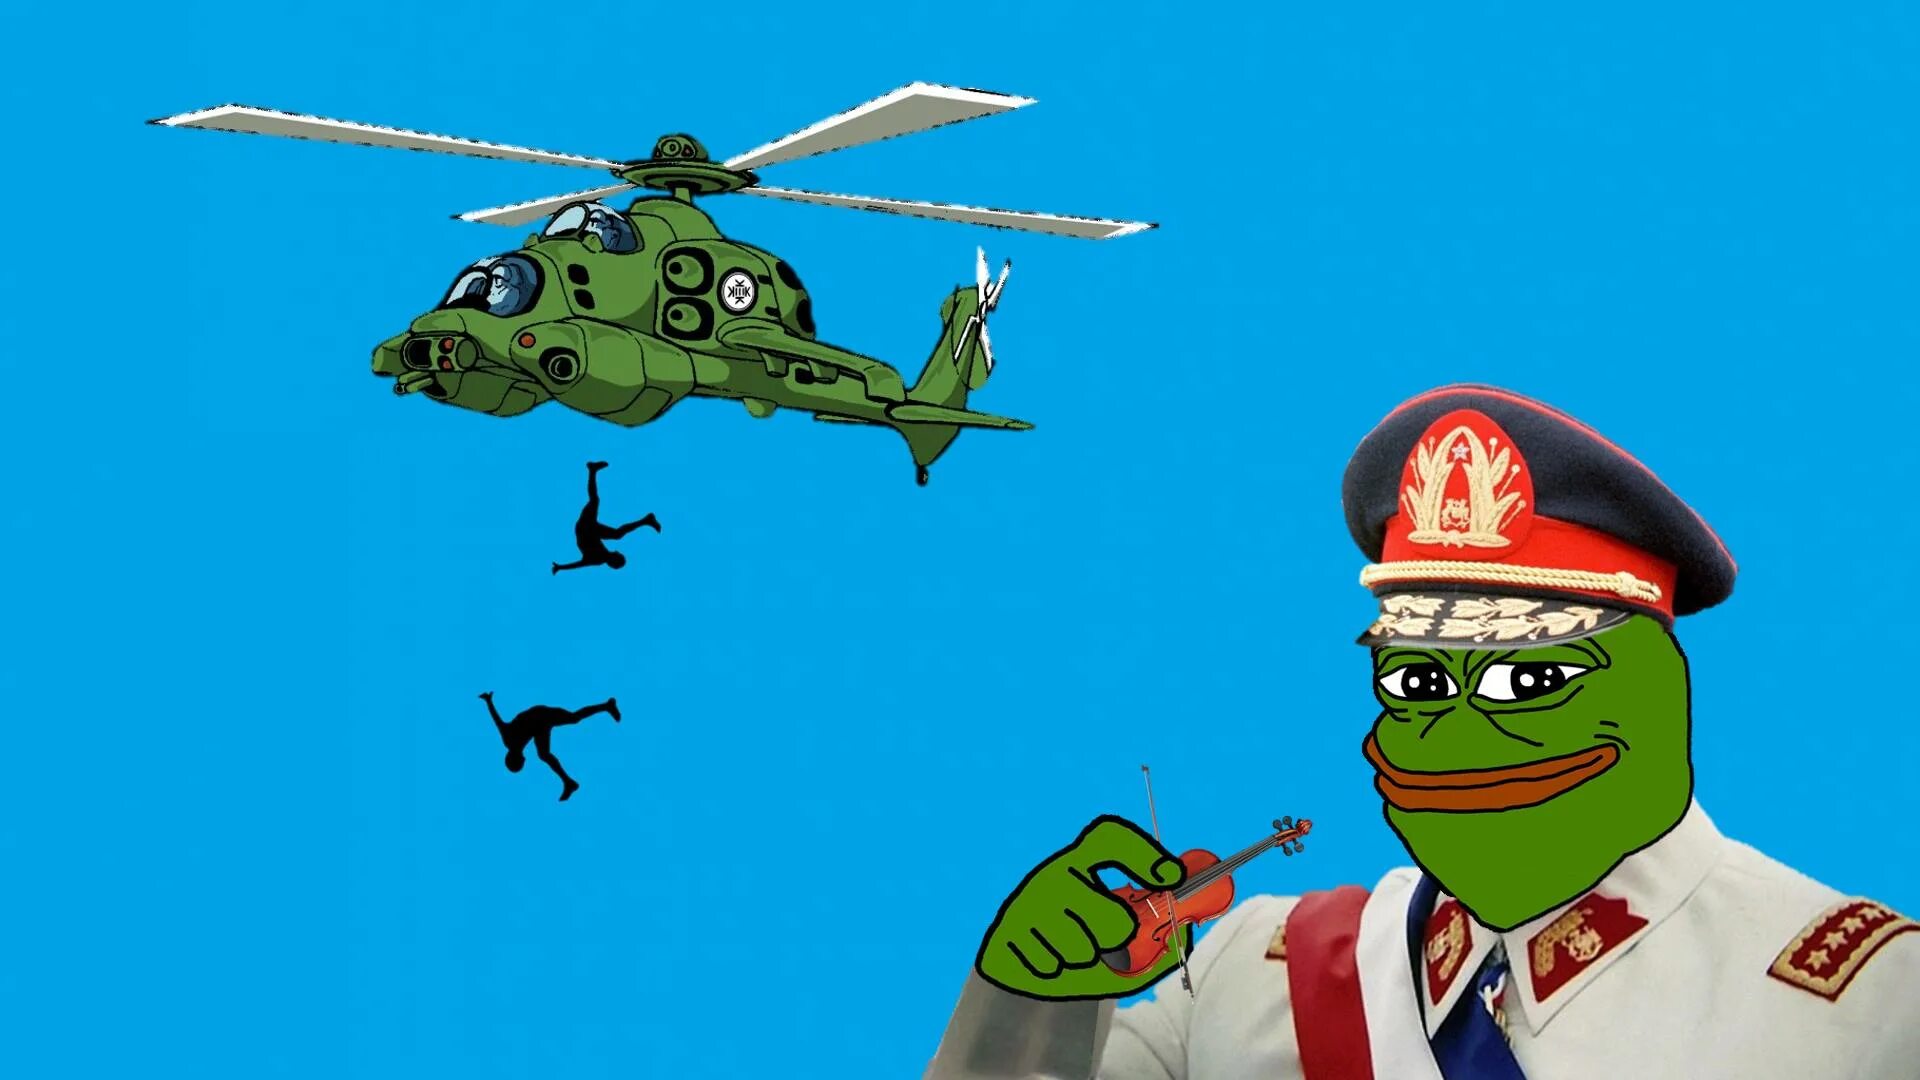 Аугусто Пиночет вертолет. Пиночет Pepe. Генерал Аугусто Пиночет. Пиночет вертолет коммунист. Скинь вертолет